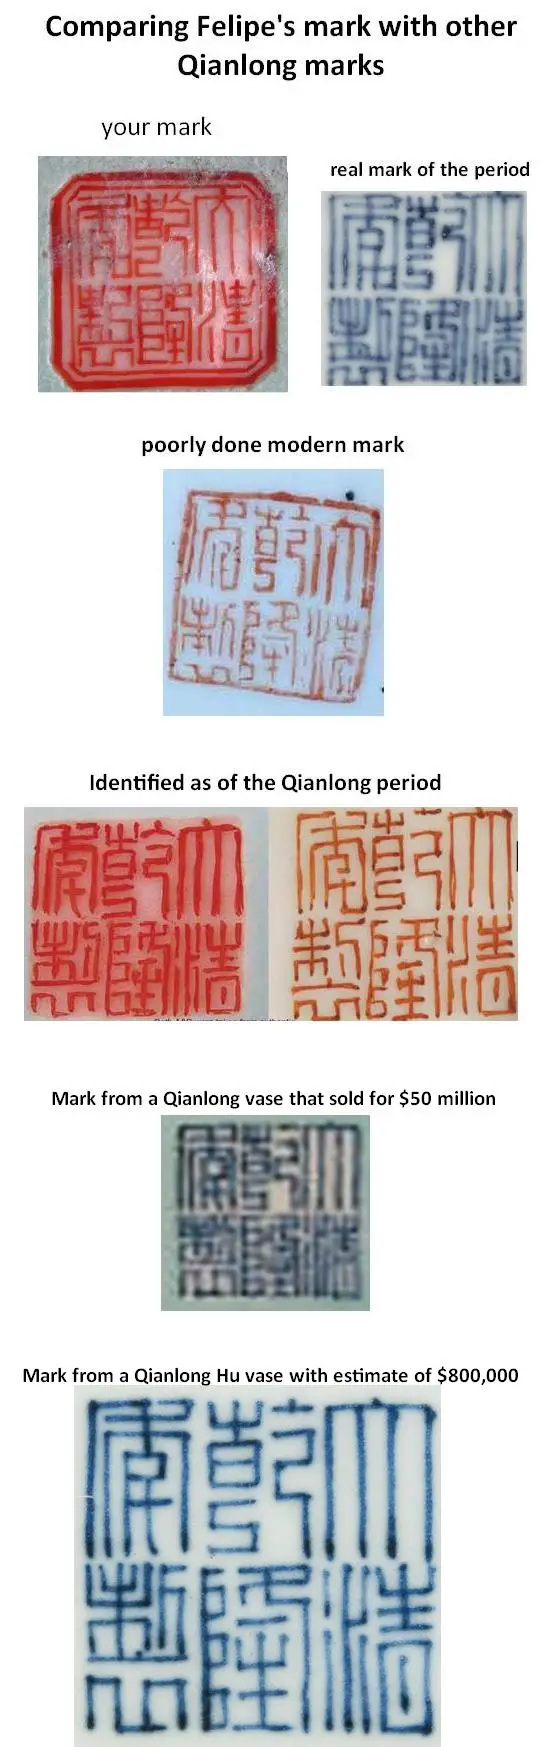 qianlong-marks-real-fake